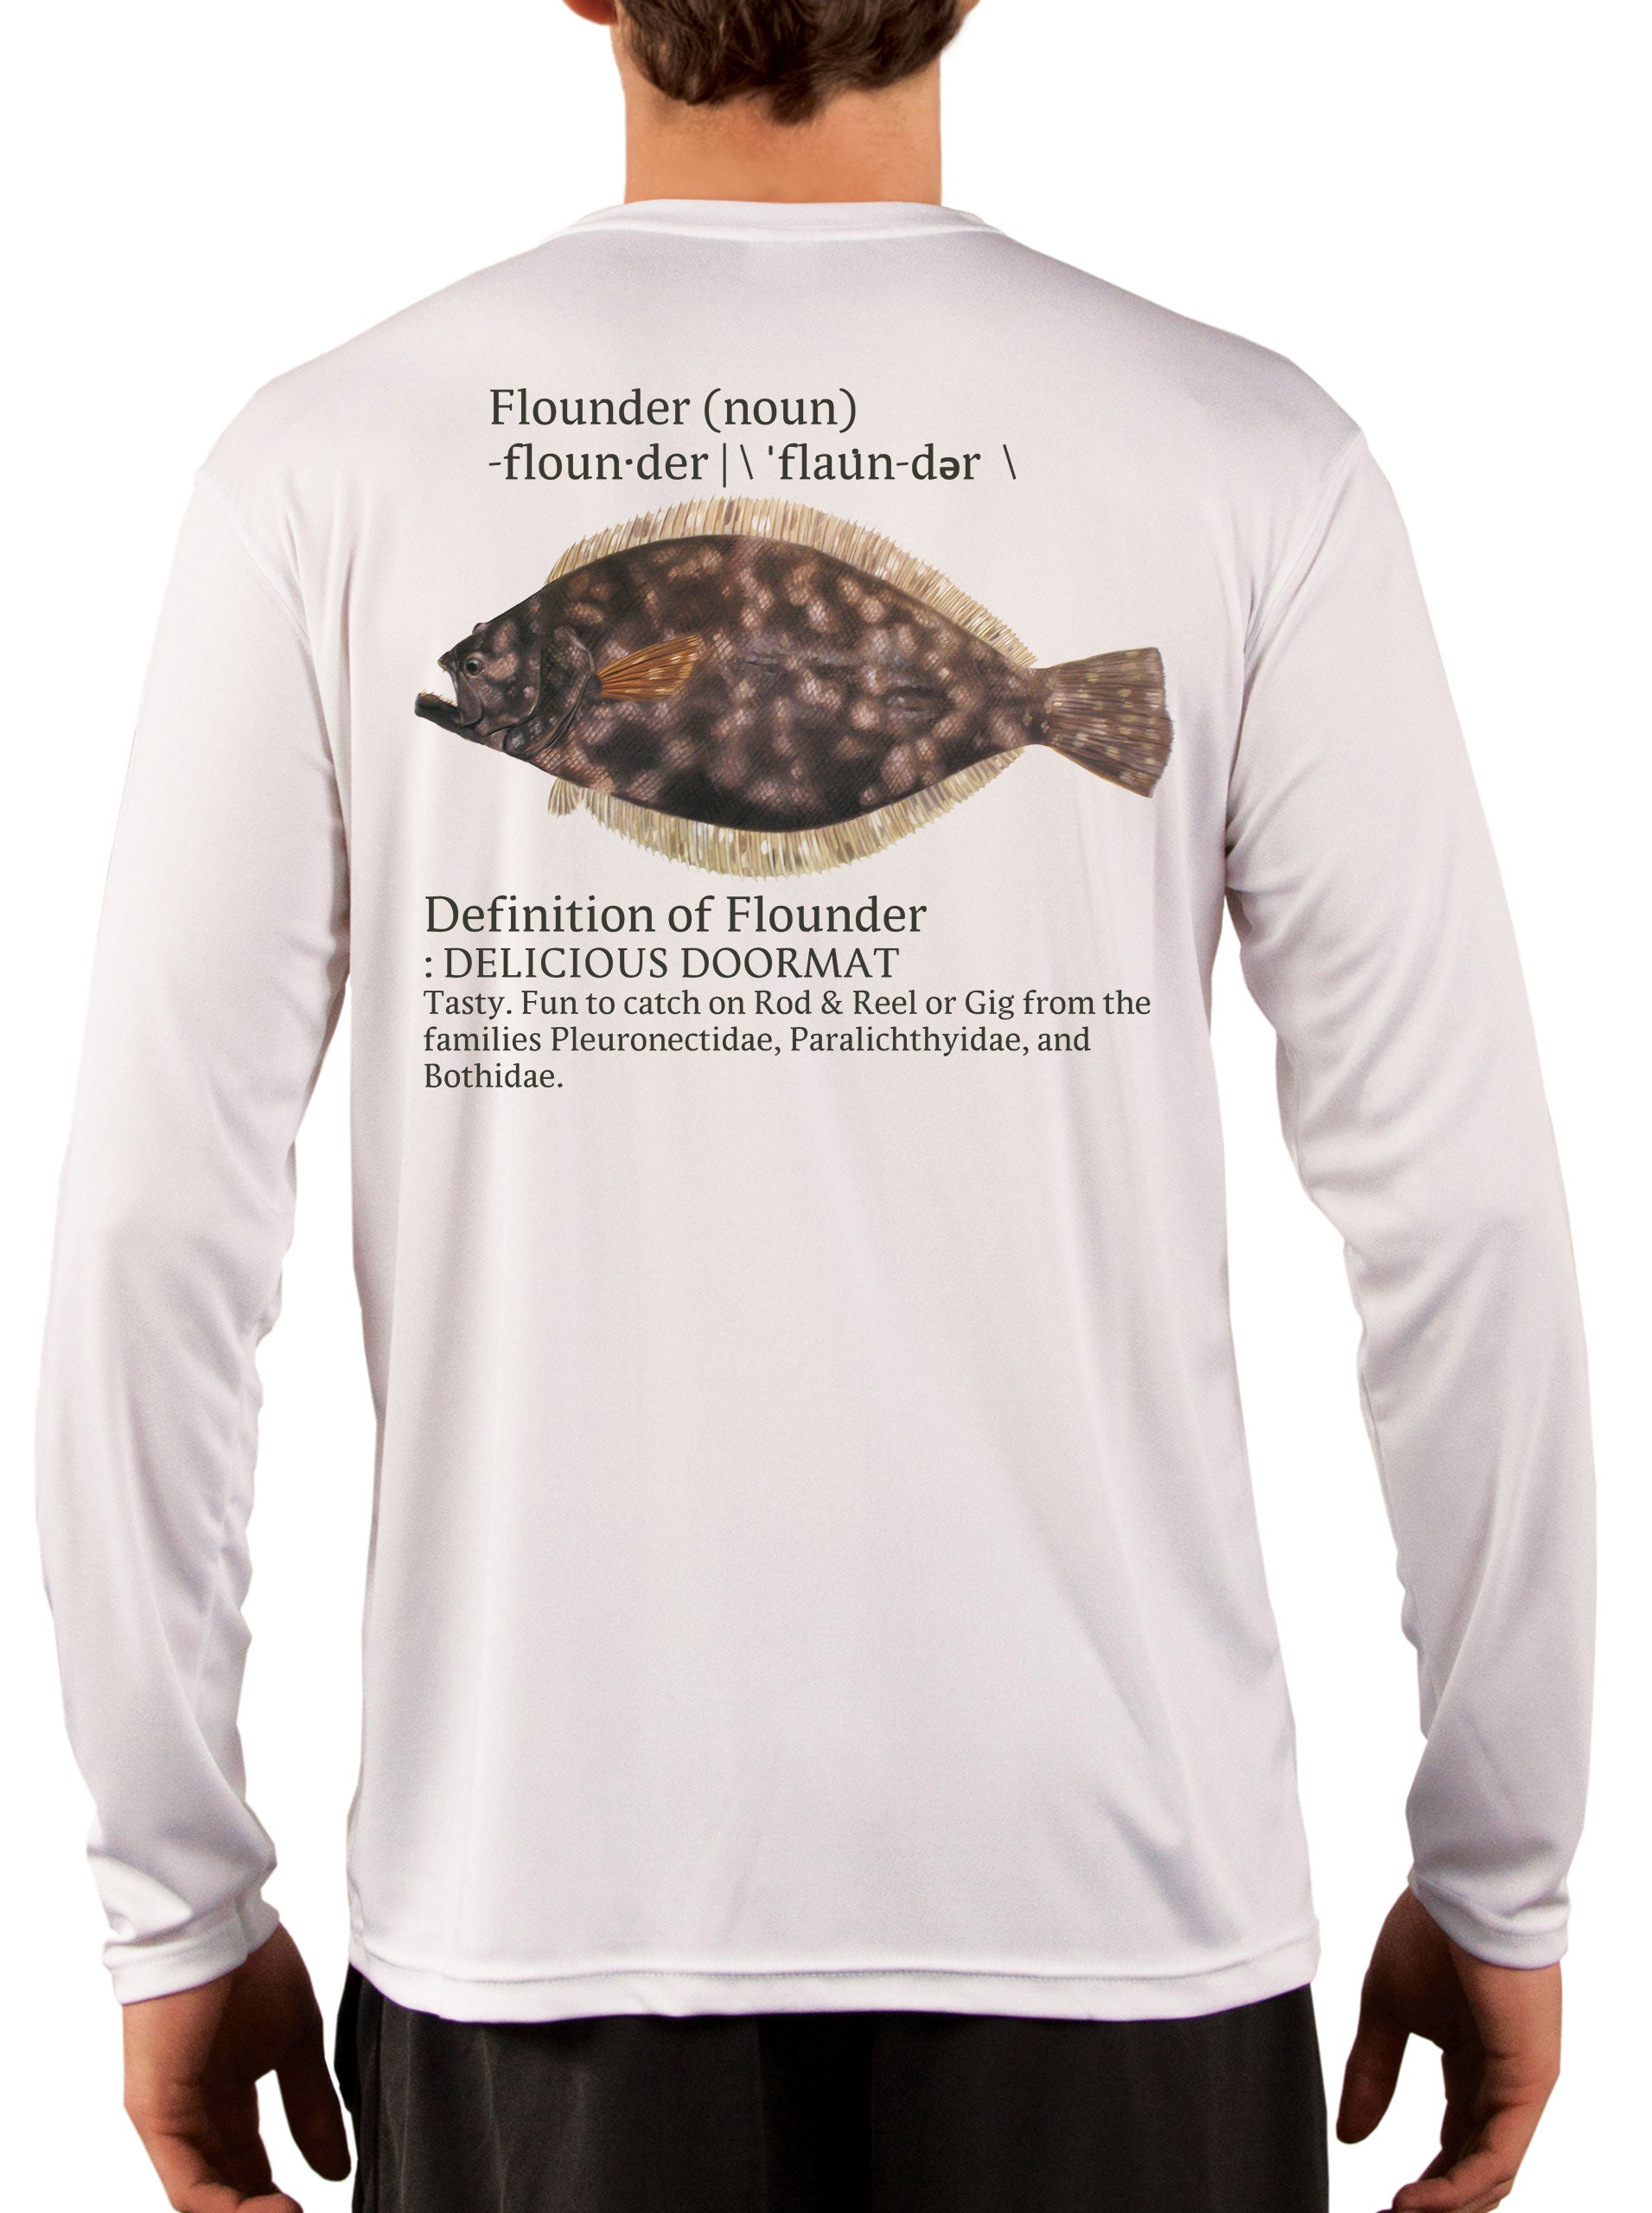 Skiff Life on X: Flounder Fishing Shirts for Men Fluke - UV Protected +50  Sun Protection with Moisture Wicking Technology   #SkiffLife #Fishing #<---TapTheLink  / X